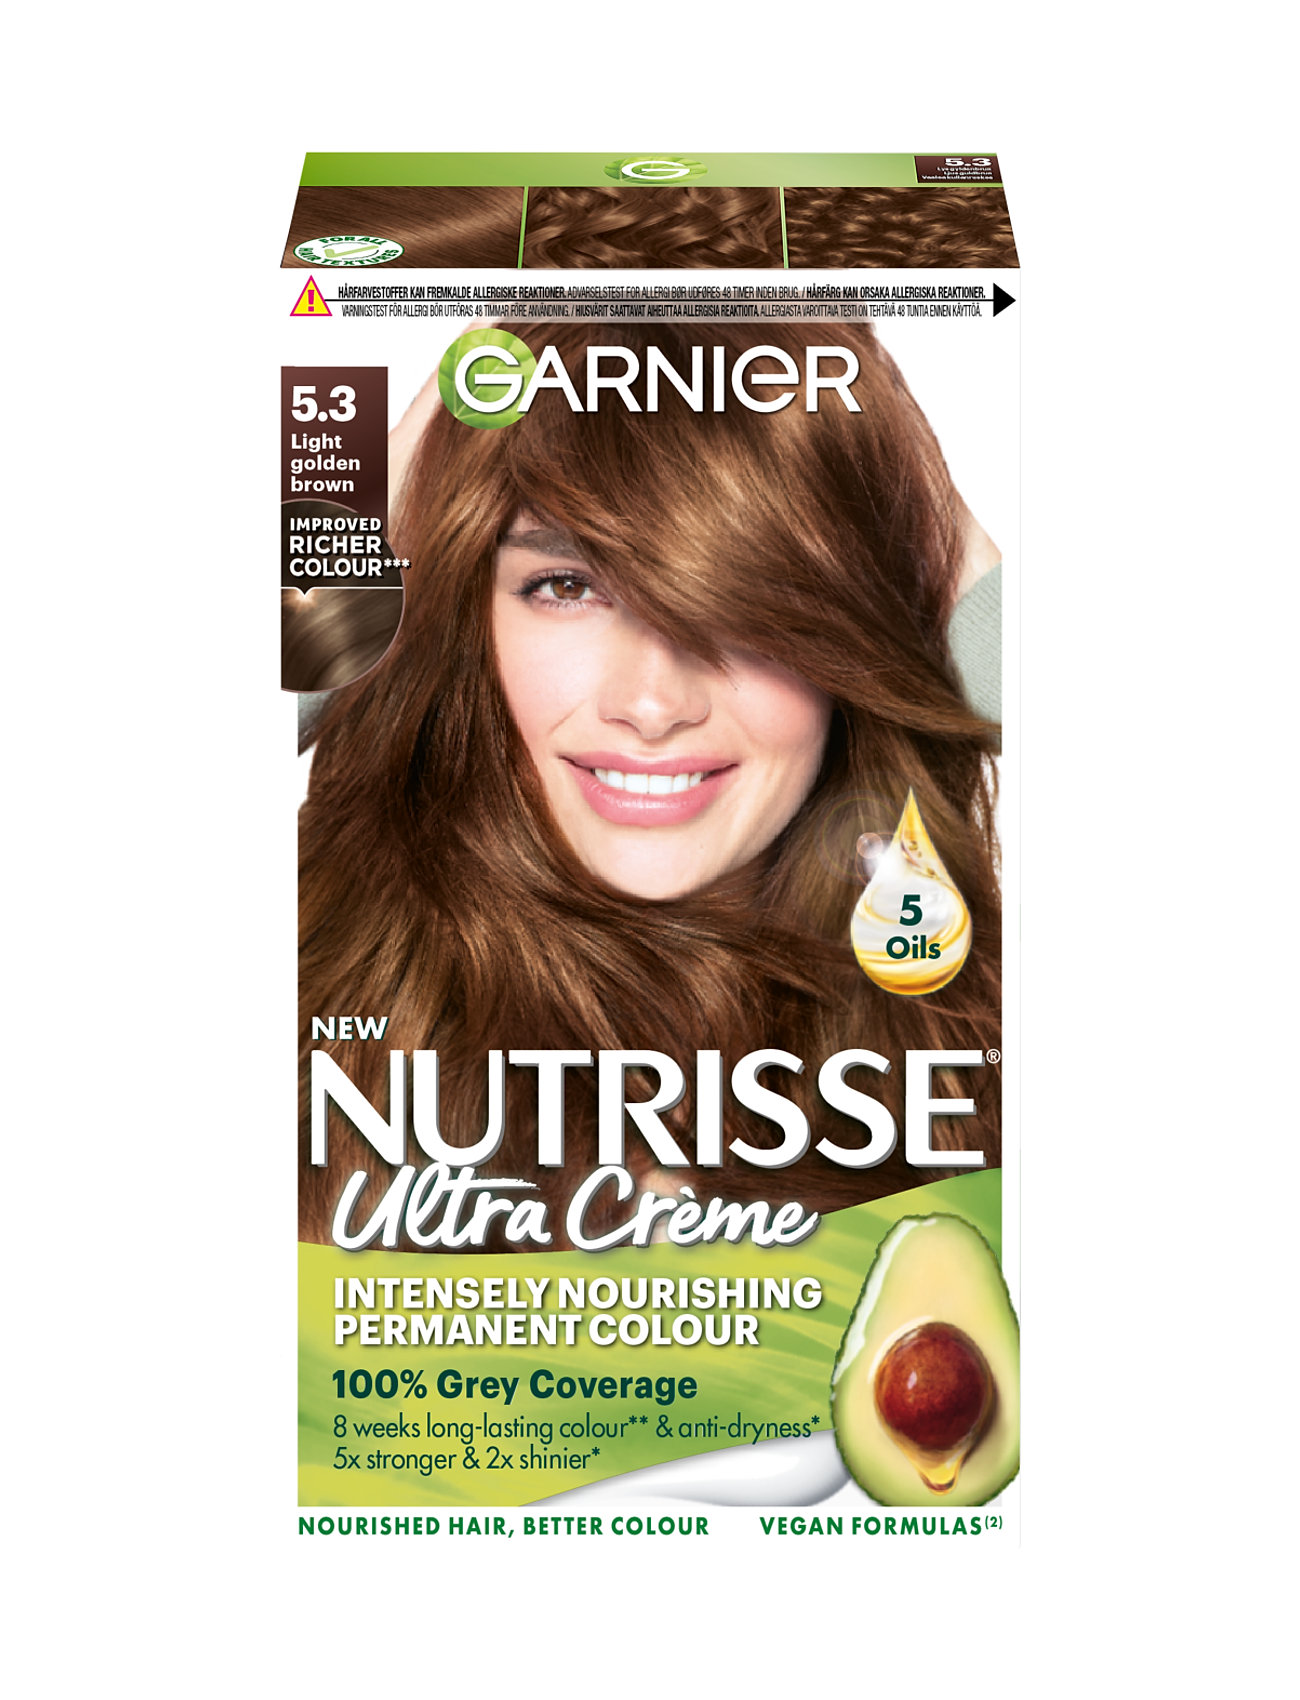 Garnier Nutrisse Ultra Crème 5.3Light Golden Brown Beauty Women Hair Care Color Treatments Nude Garnier